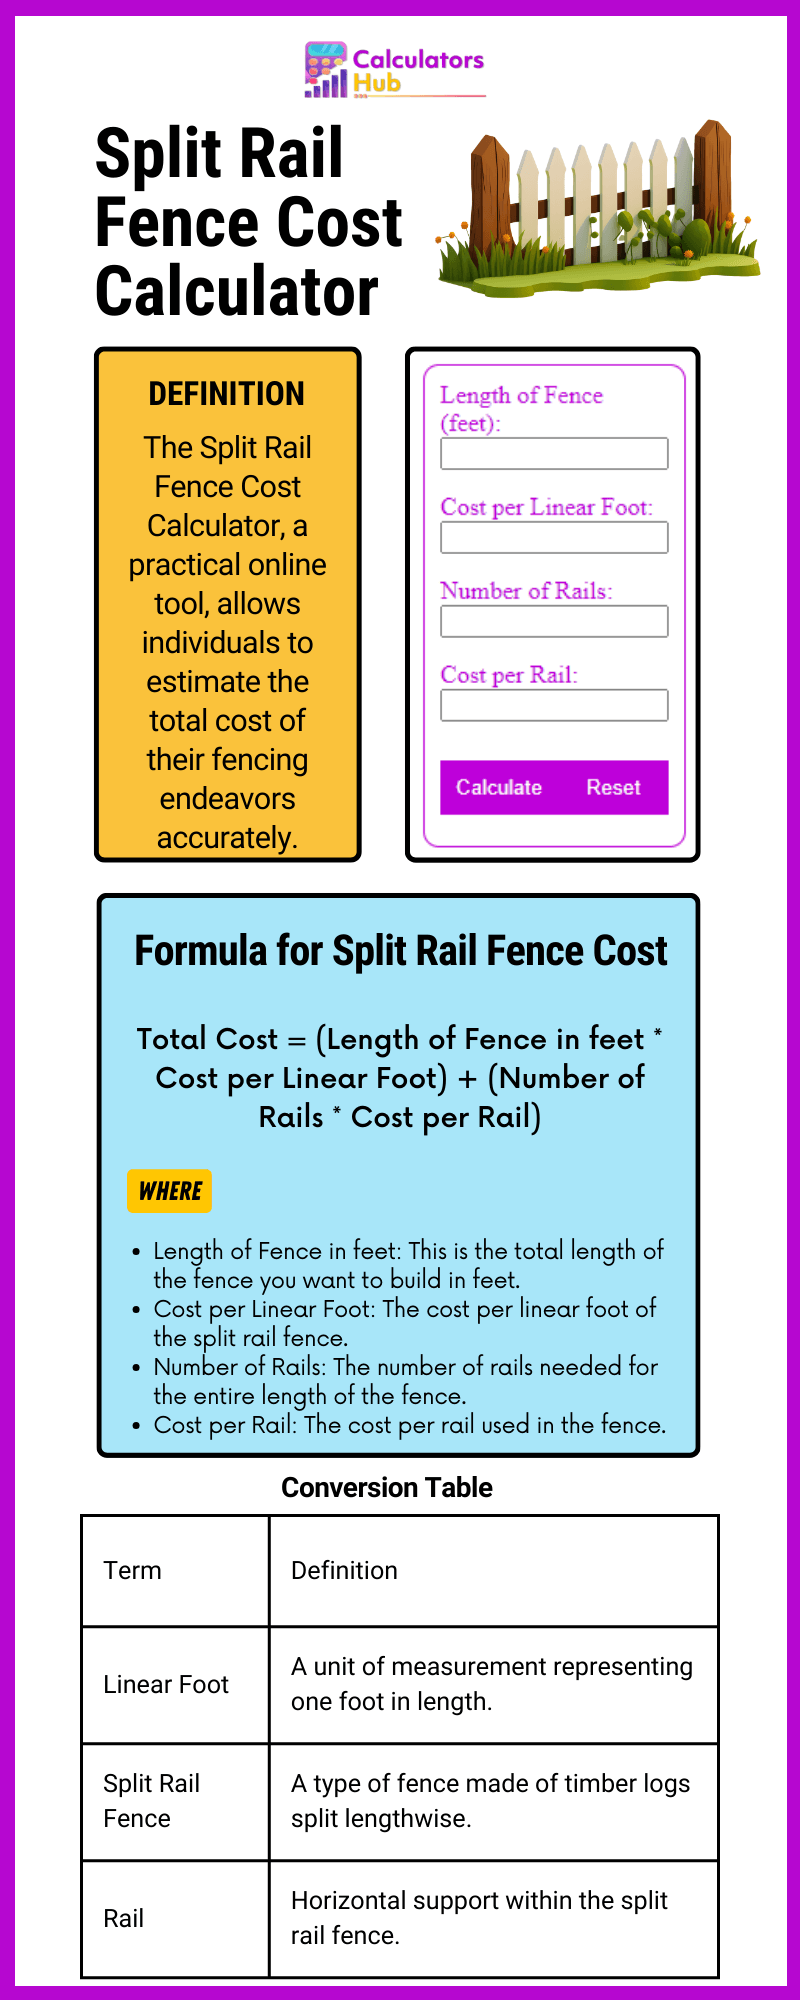 Split Rail Fence Cost Calculator